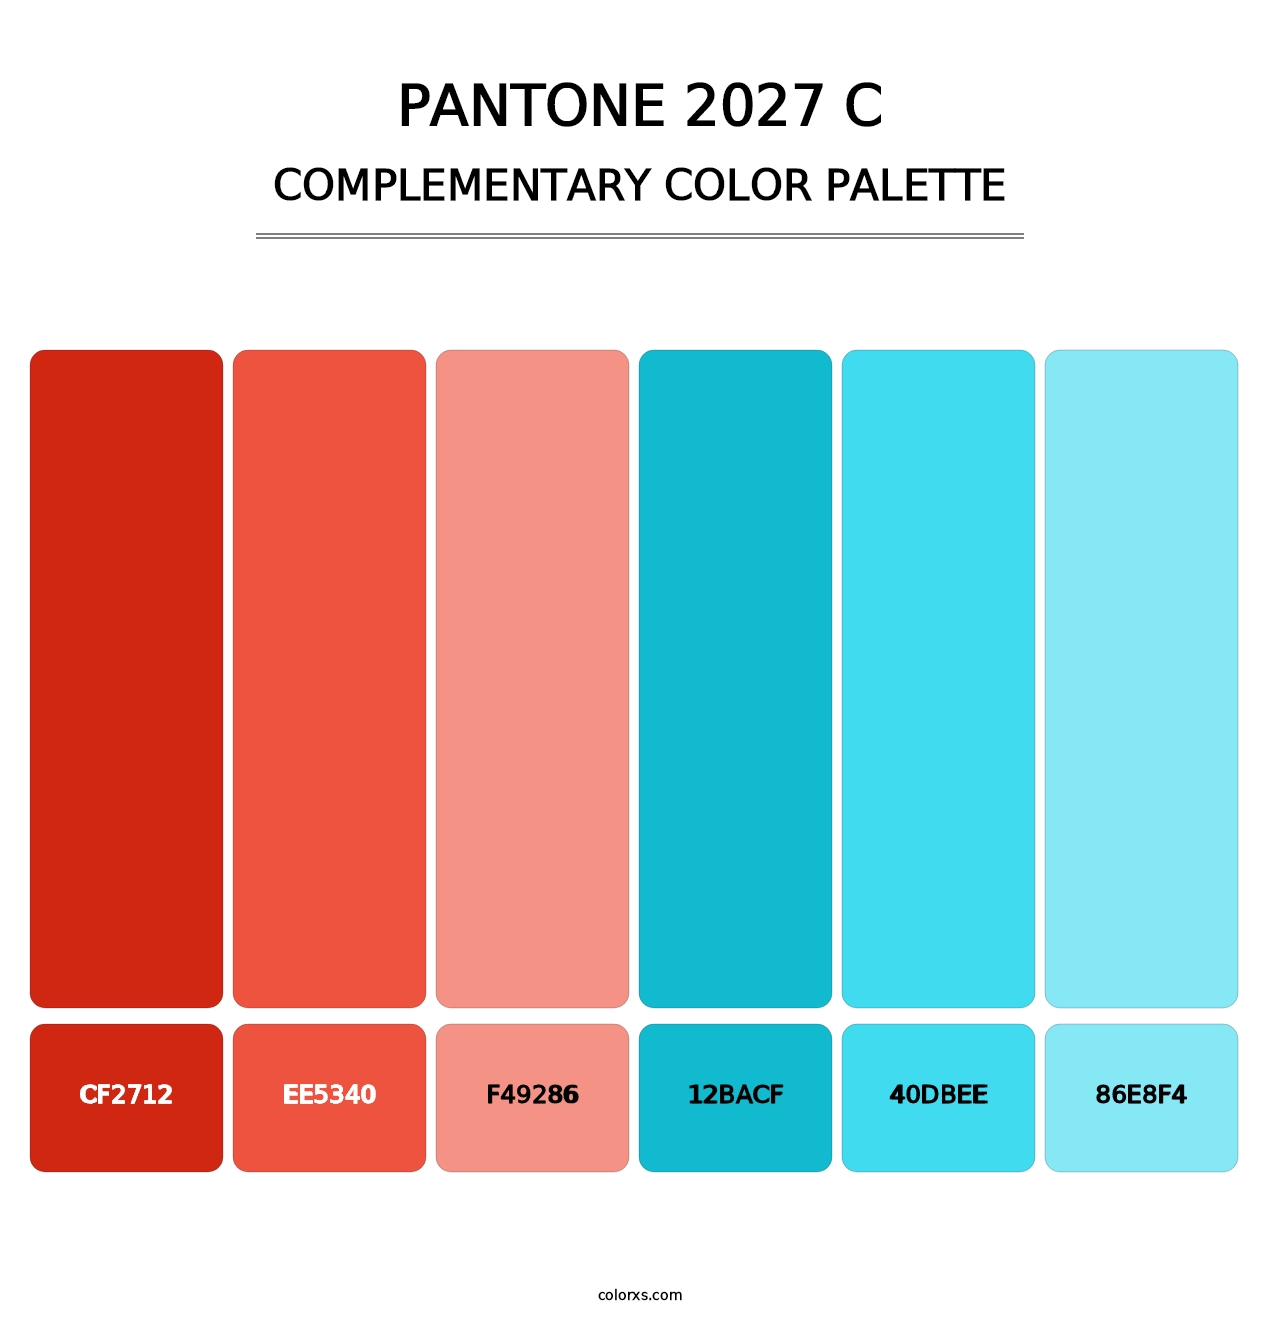 PANTONE 2027 C - Complementary Color Palette